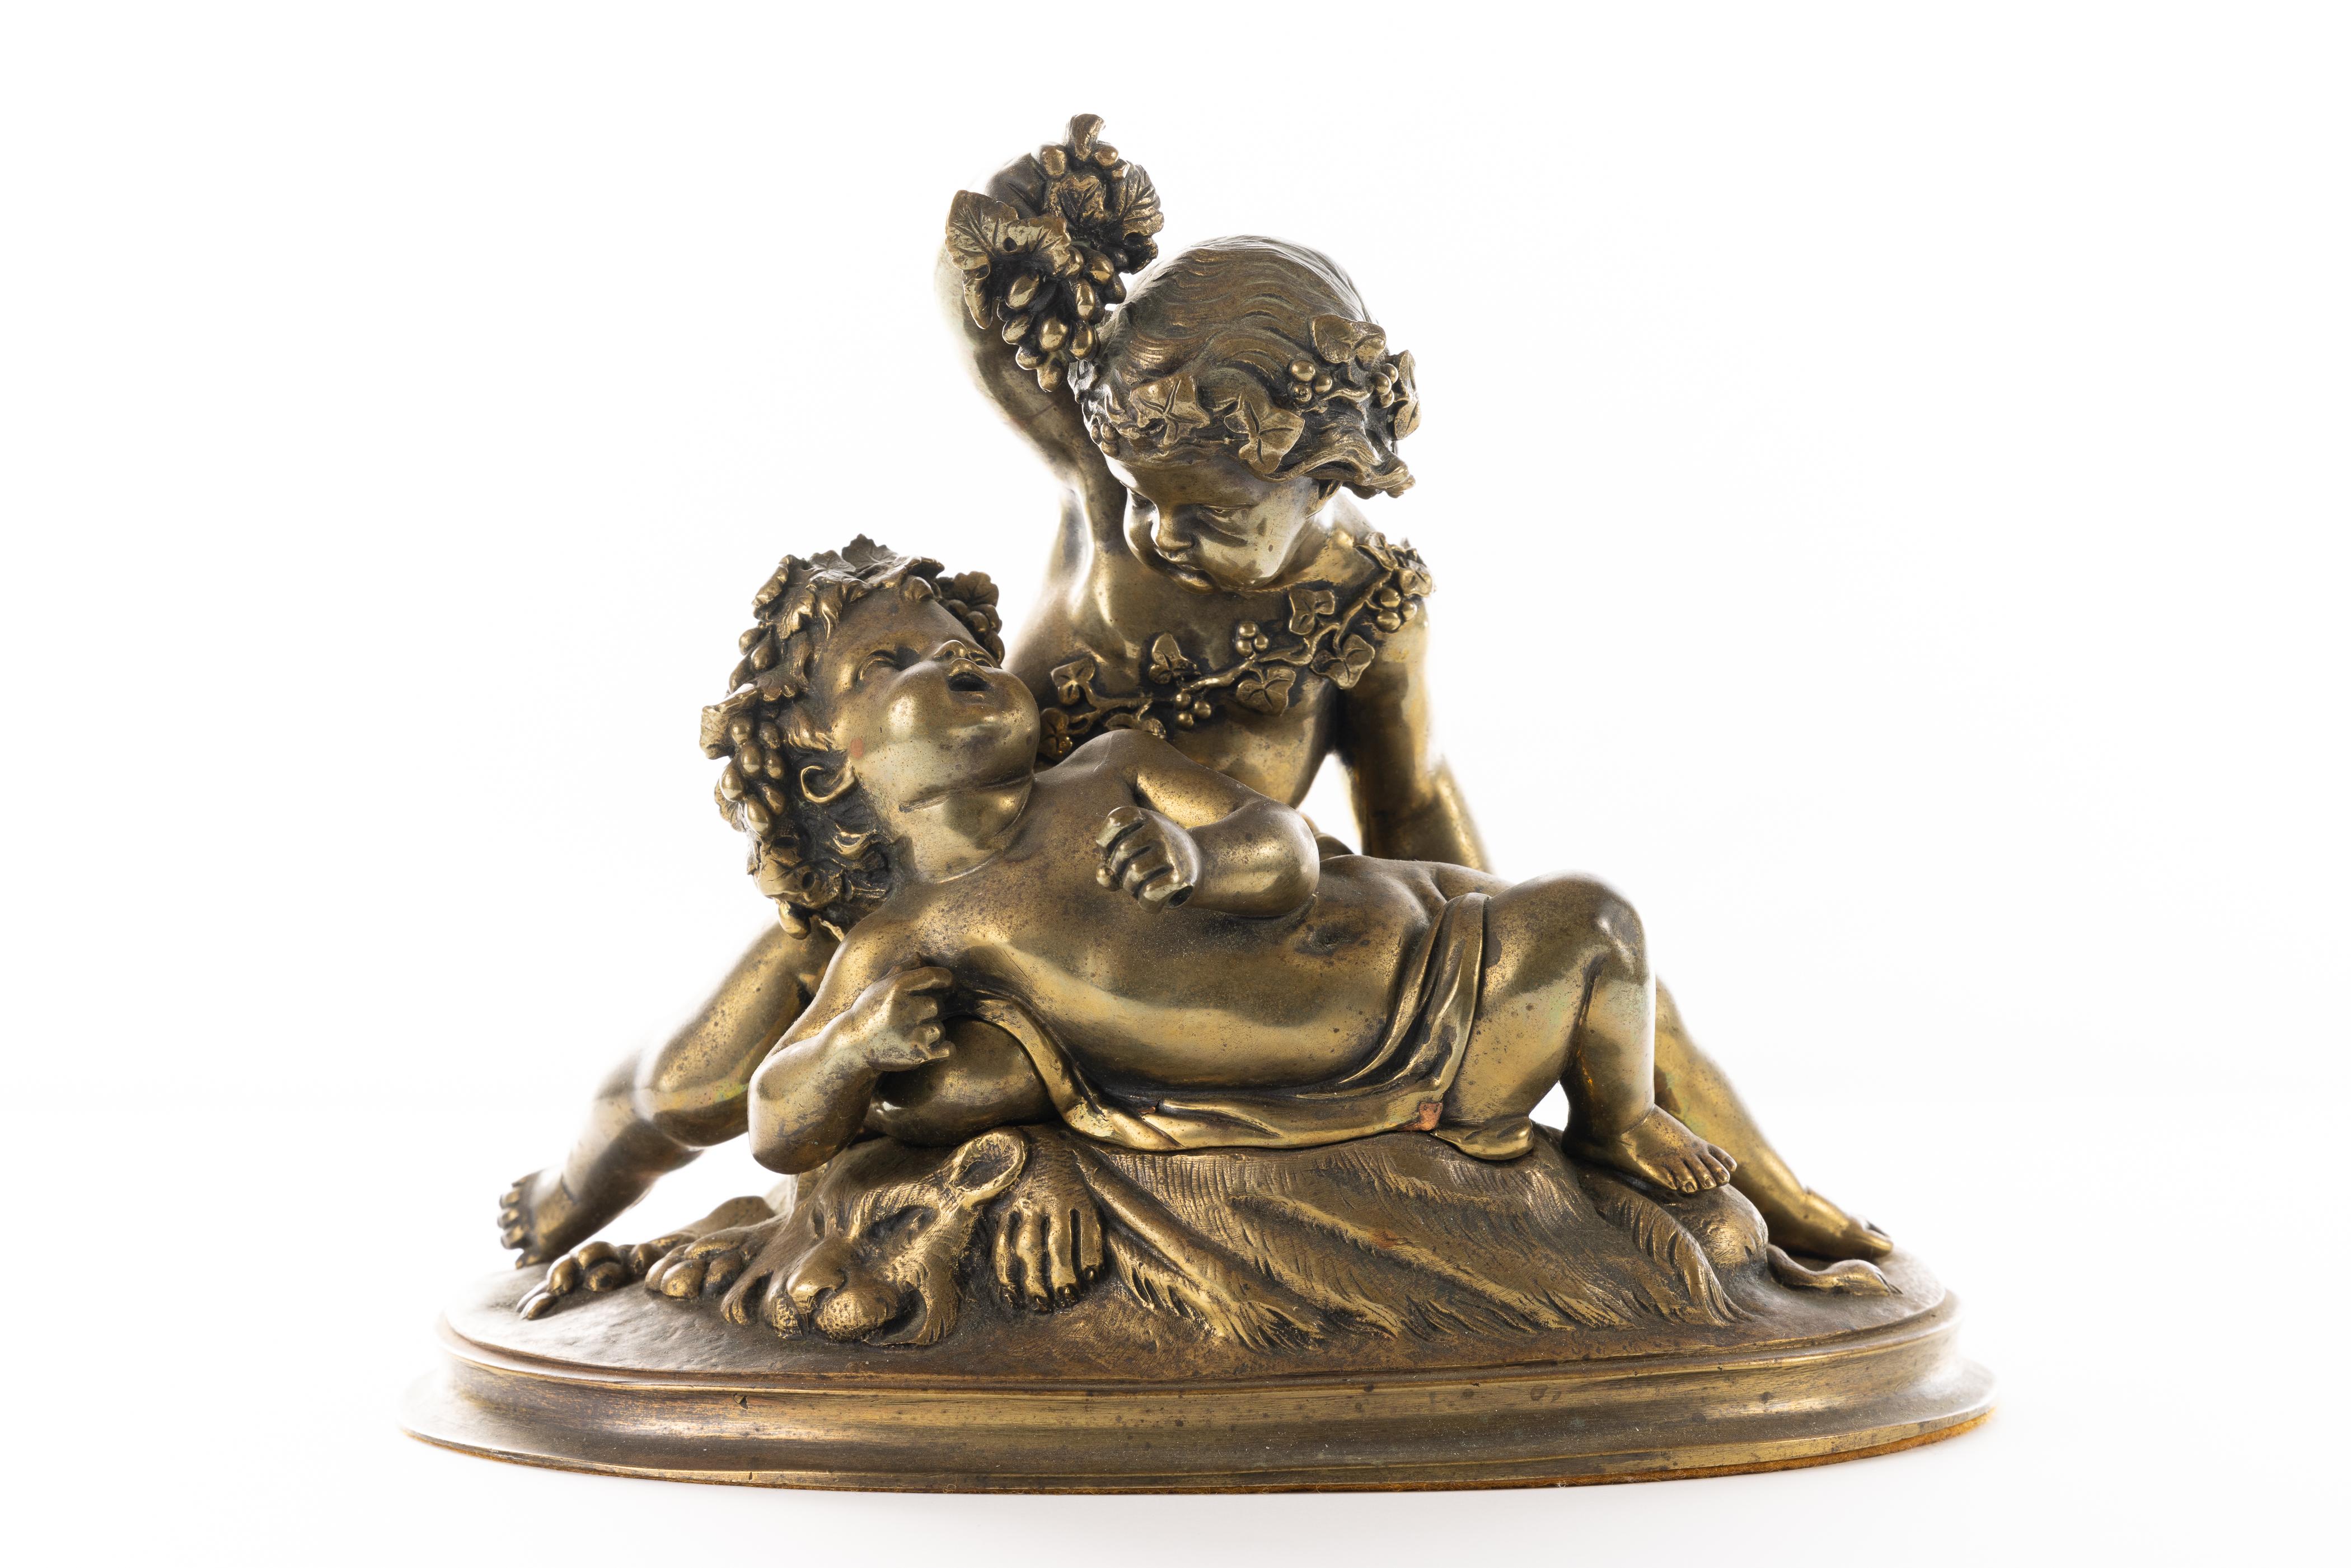 Unknown Figurative Sculpture - 19th Century French Bacchanalian Bronze 